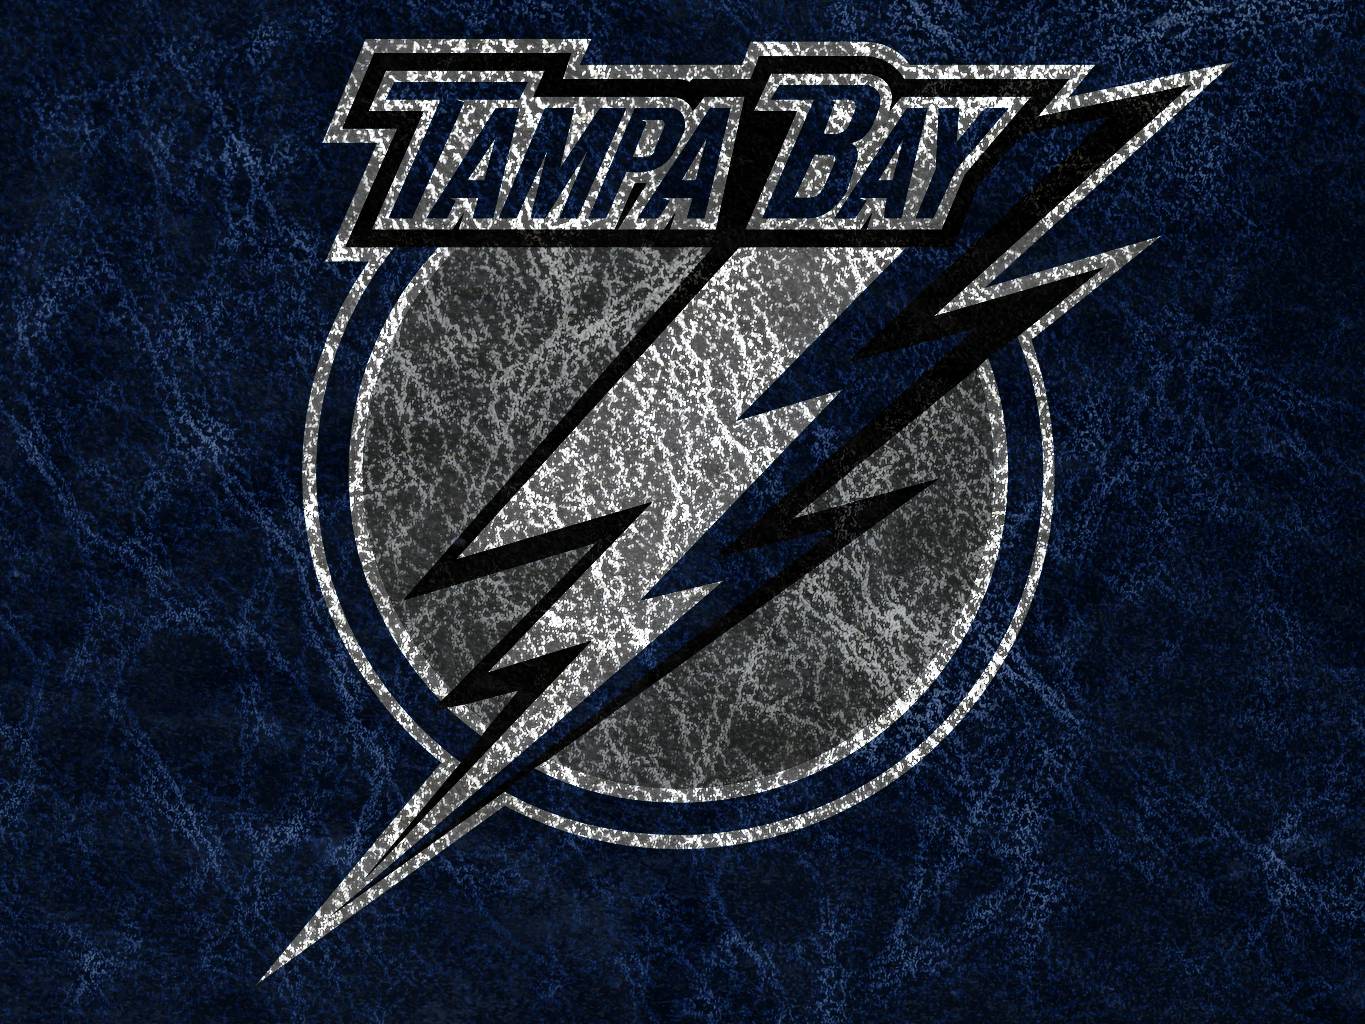 Tampa Bay Lightning Wallpaper 1365x1024 (291.12 KB)